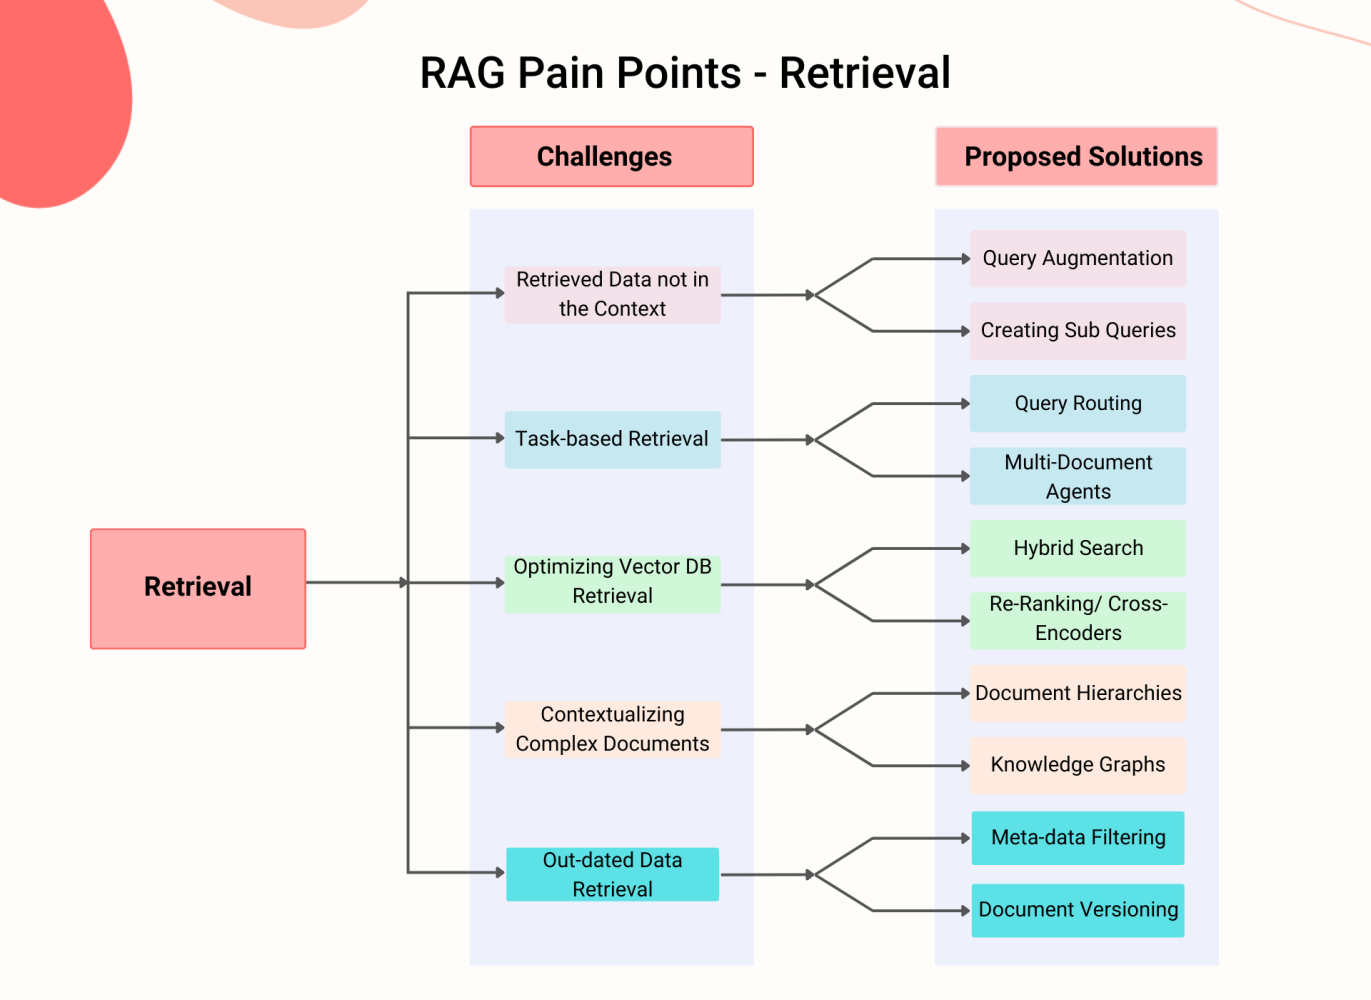 RAG model - Challenges - Retrieval Stage